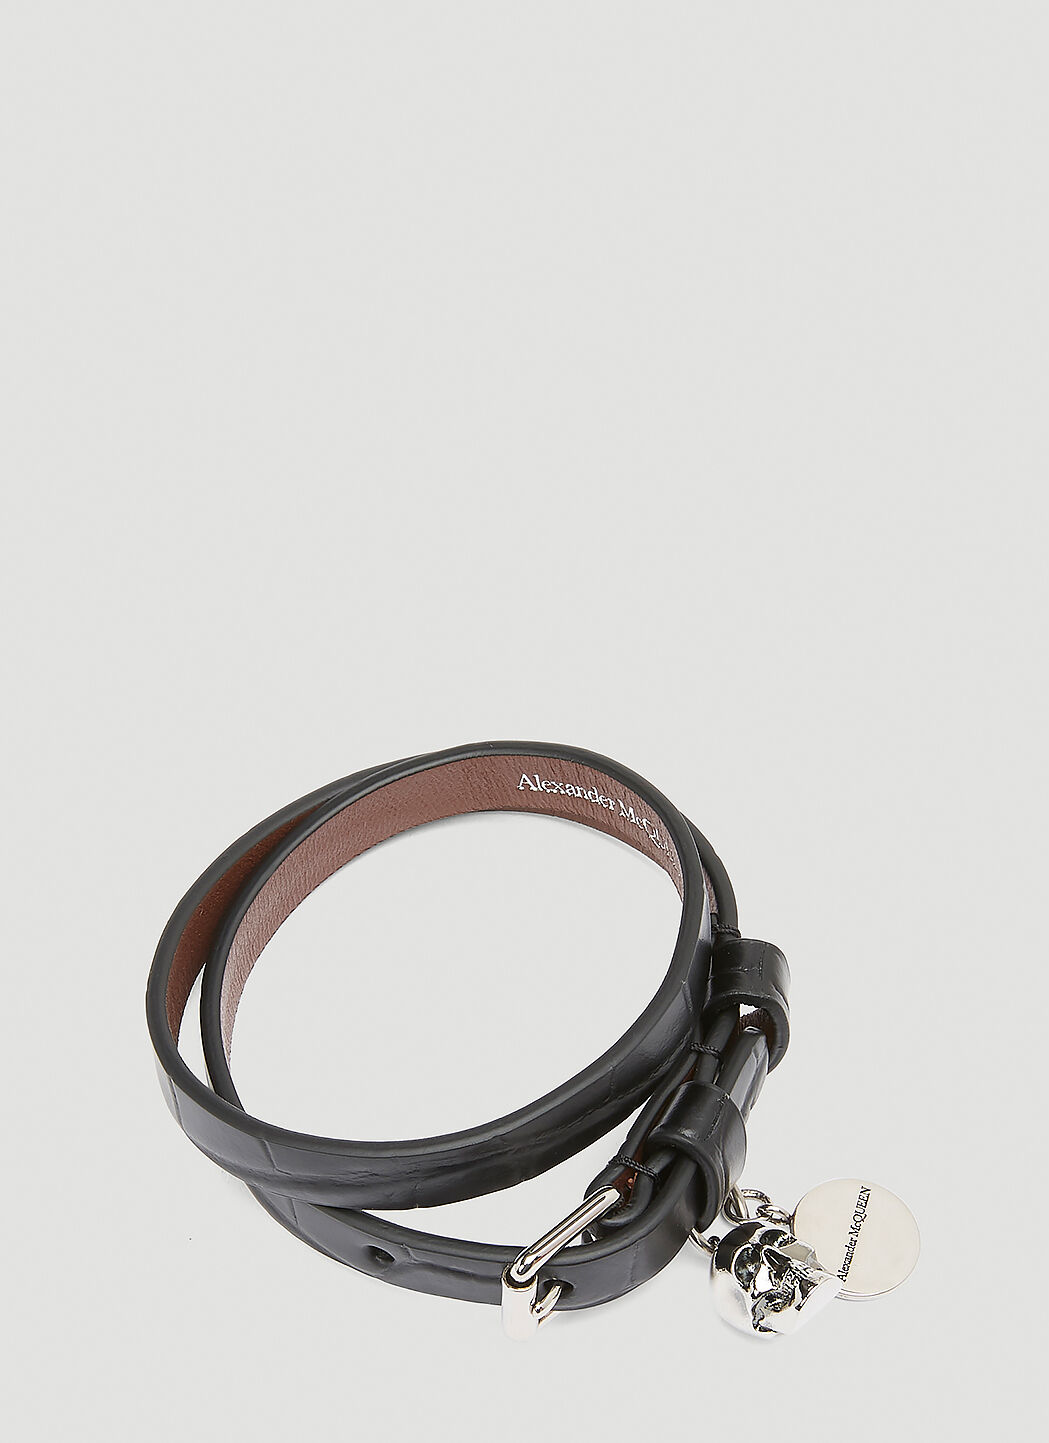 Alexander McQueen 双环皮革手镯 黑 amq0143011